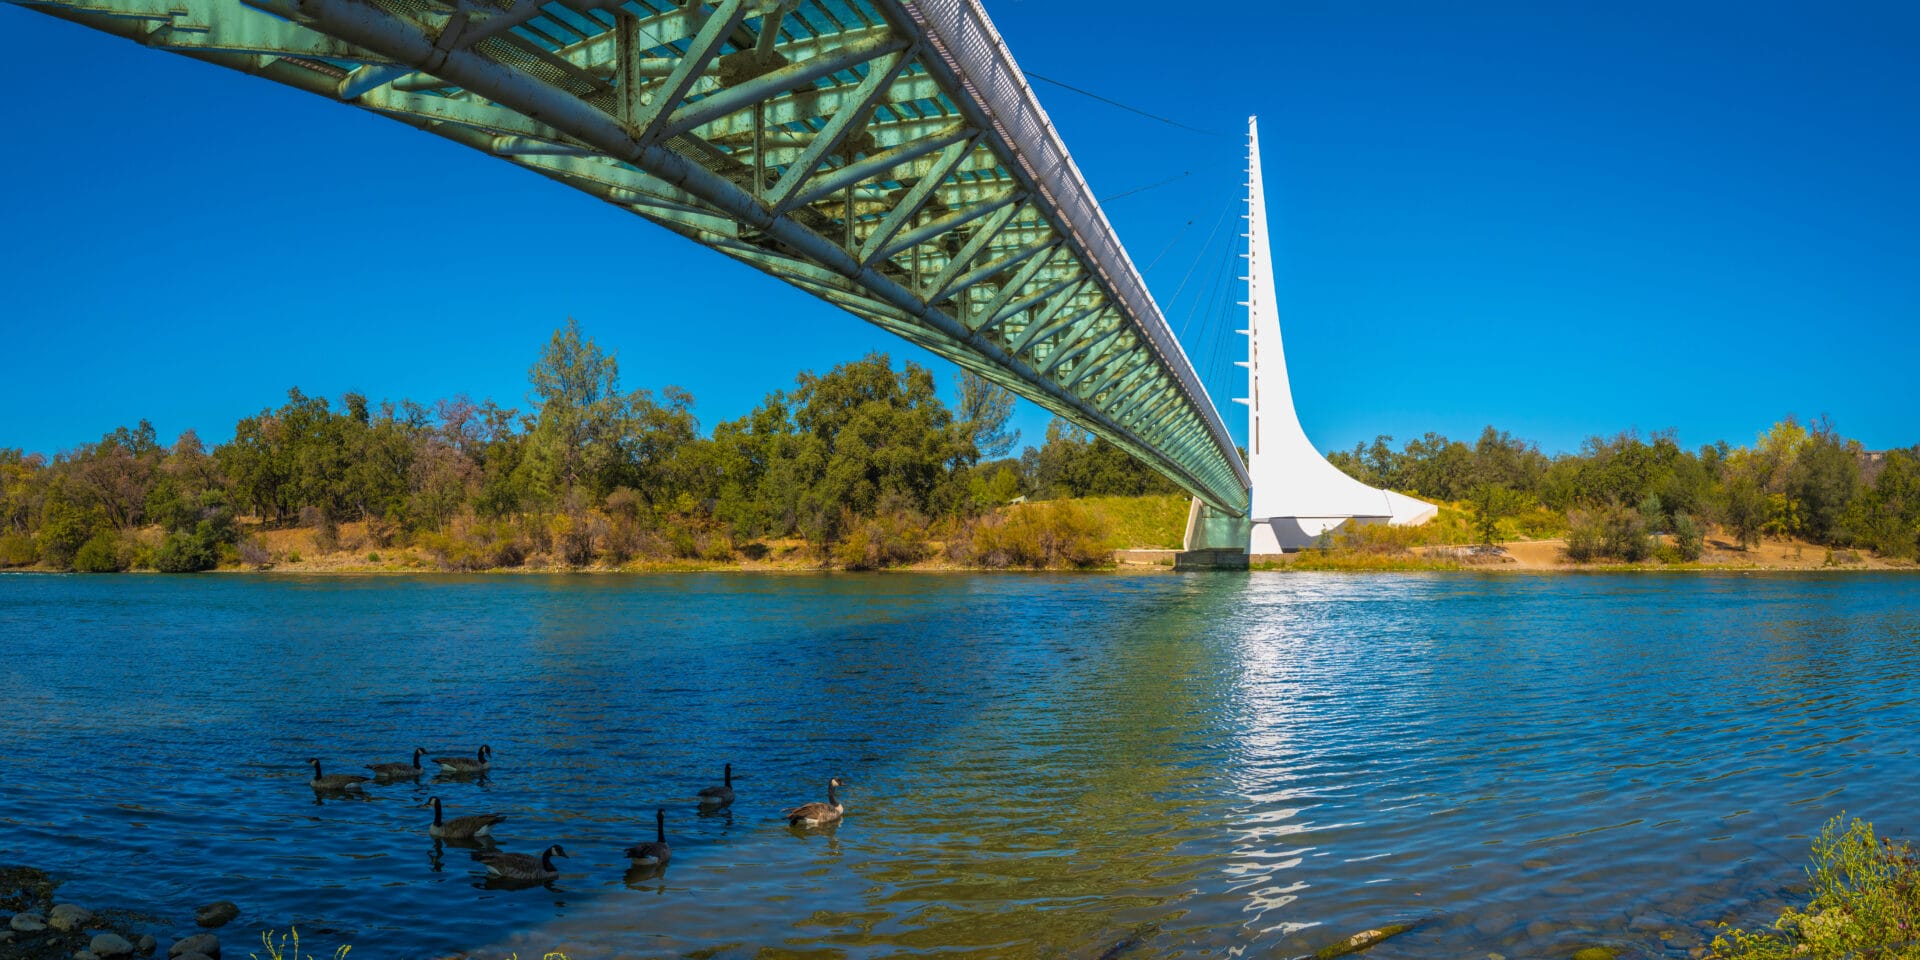 Wild animals and geese in Sacramento River in autumn, under Sundial Bridge in Redding, Northern California